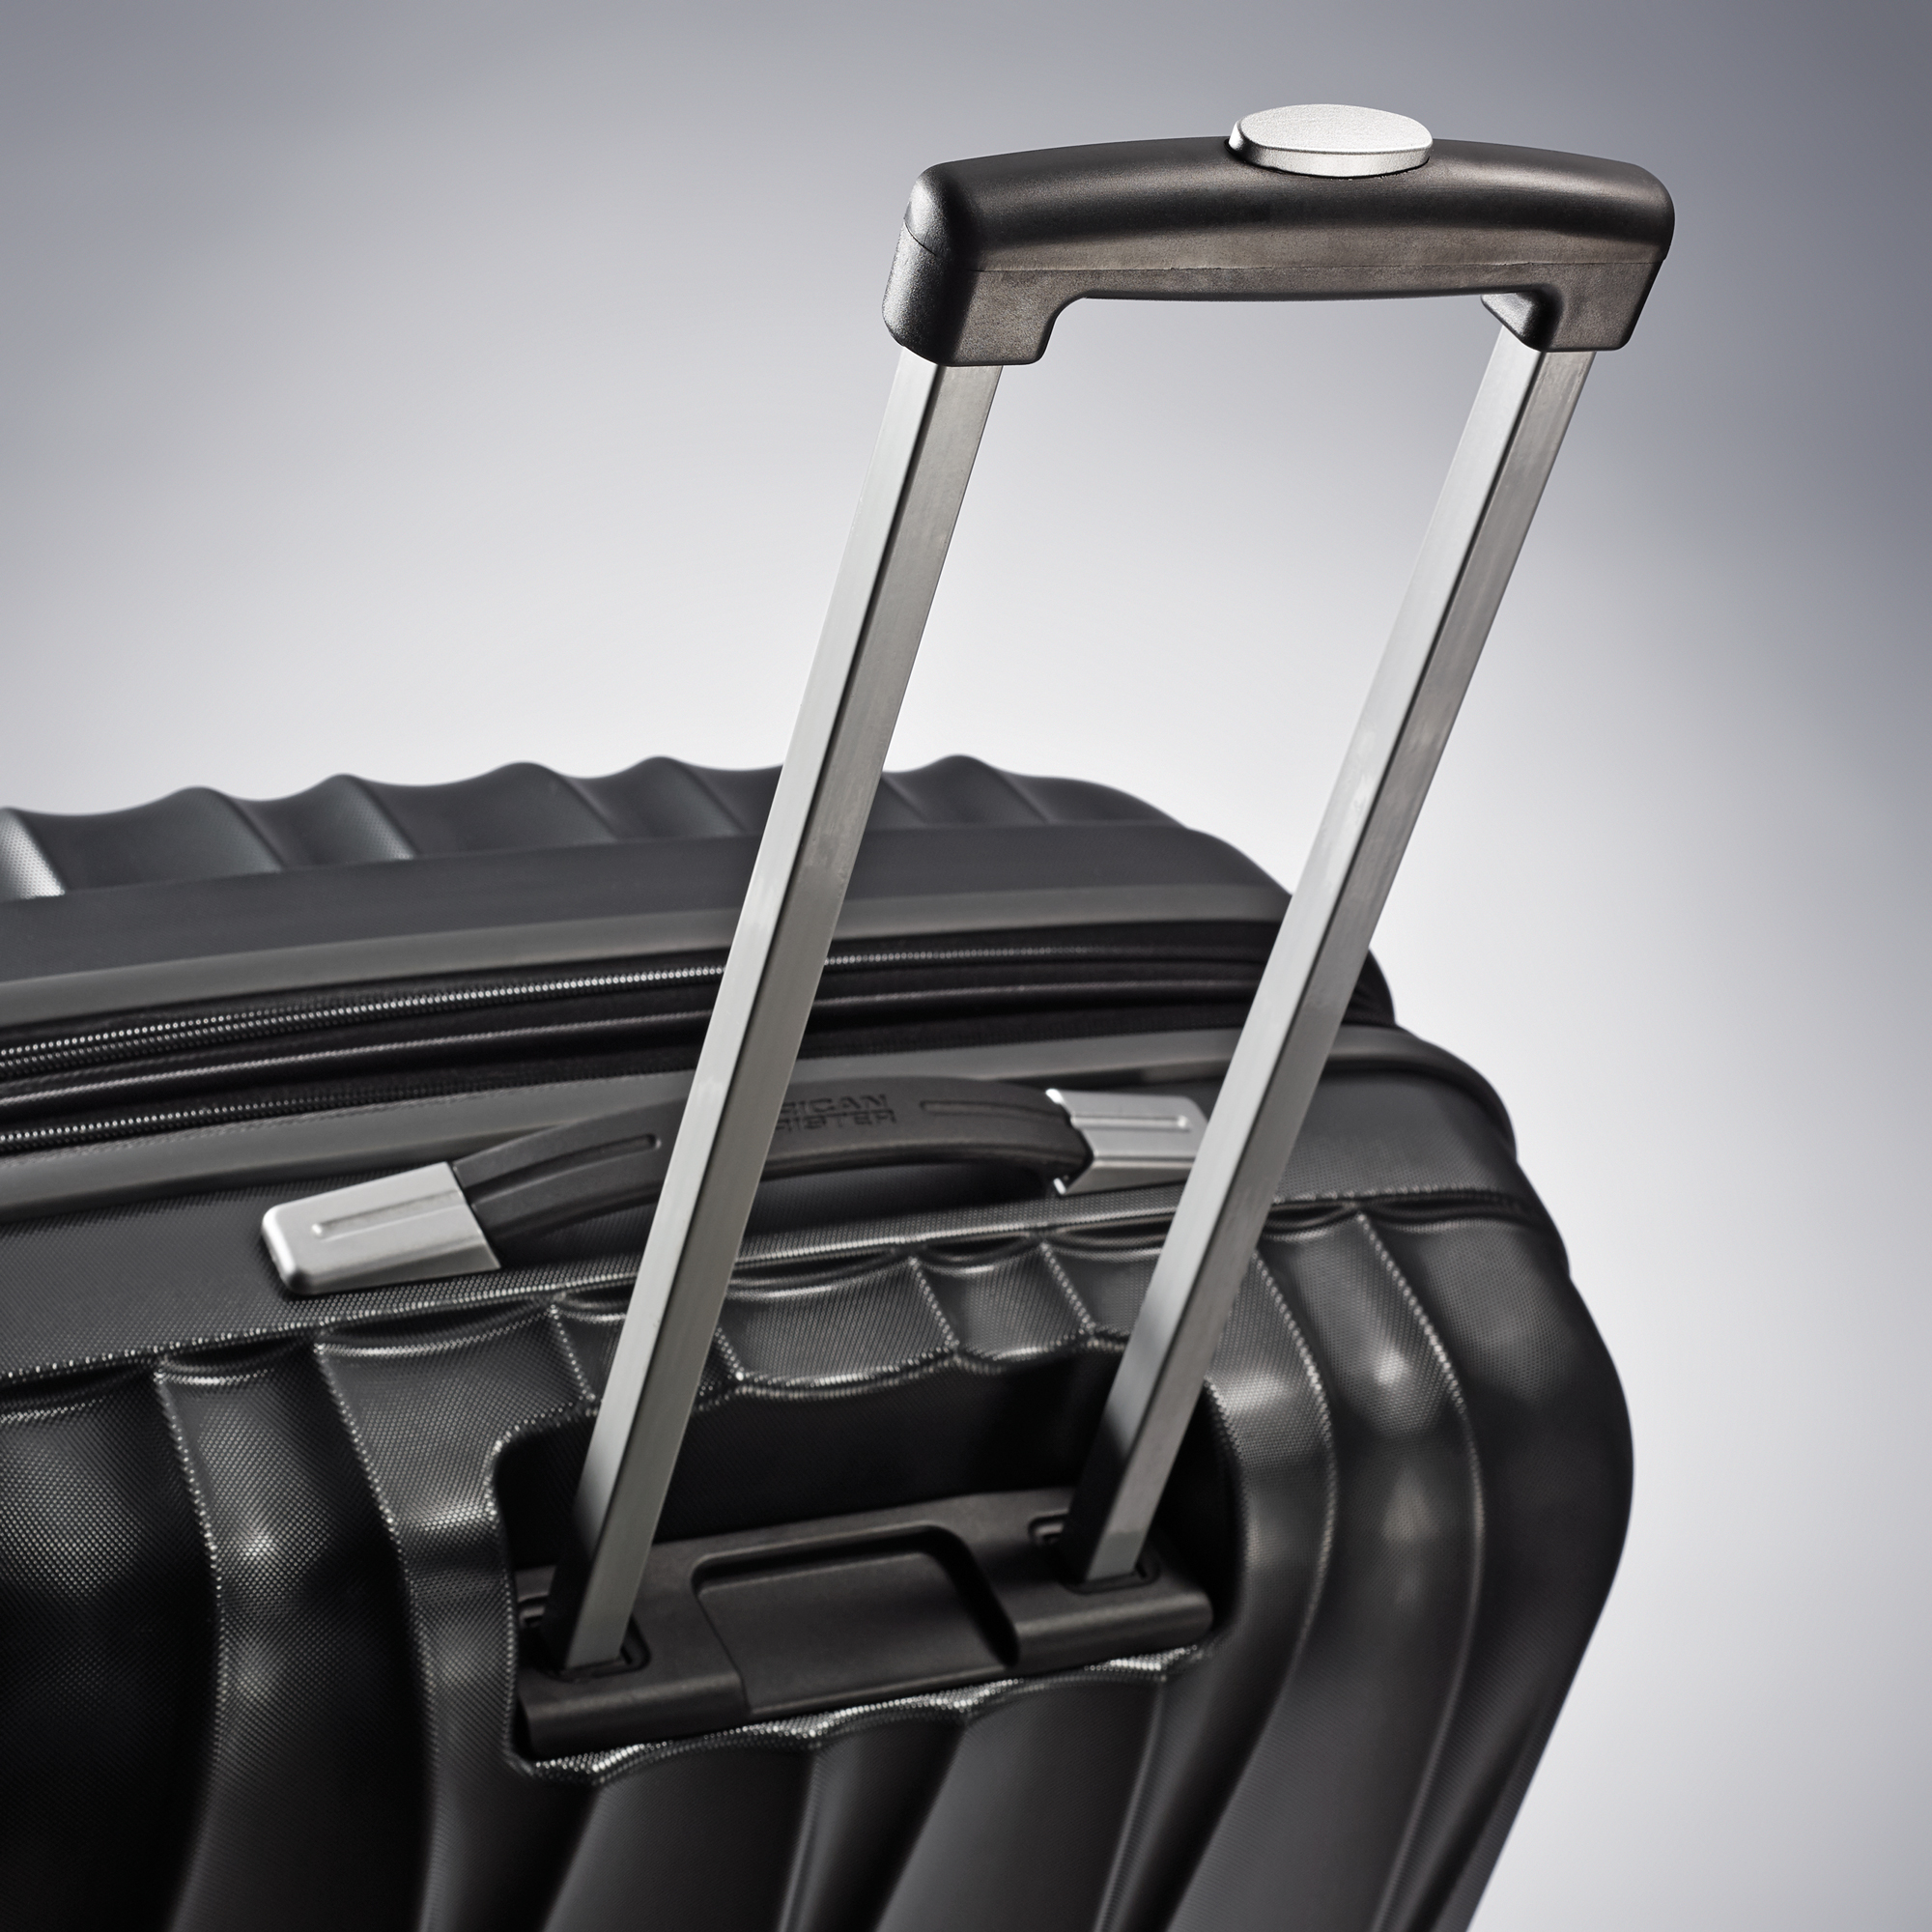 American Tourister Arona Premium Hardside Spinner 3Pcs Luggage Set 20" 25" 29" (Charcoal) - image 2 of 10